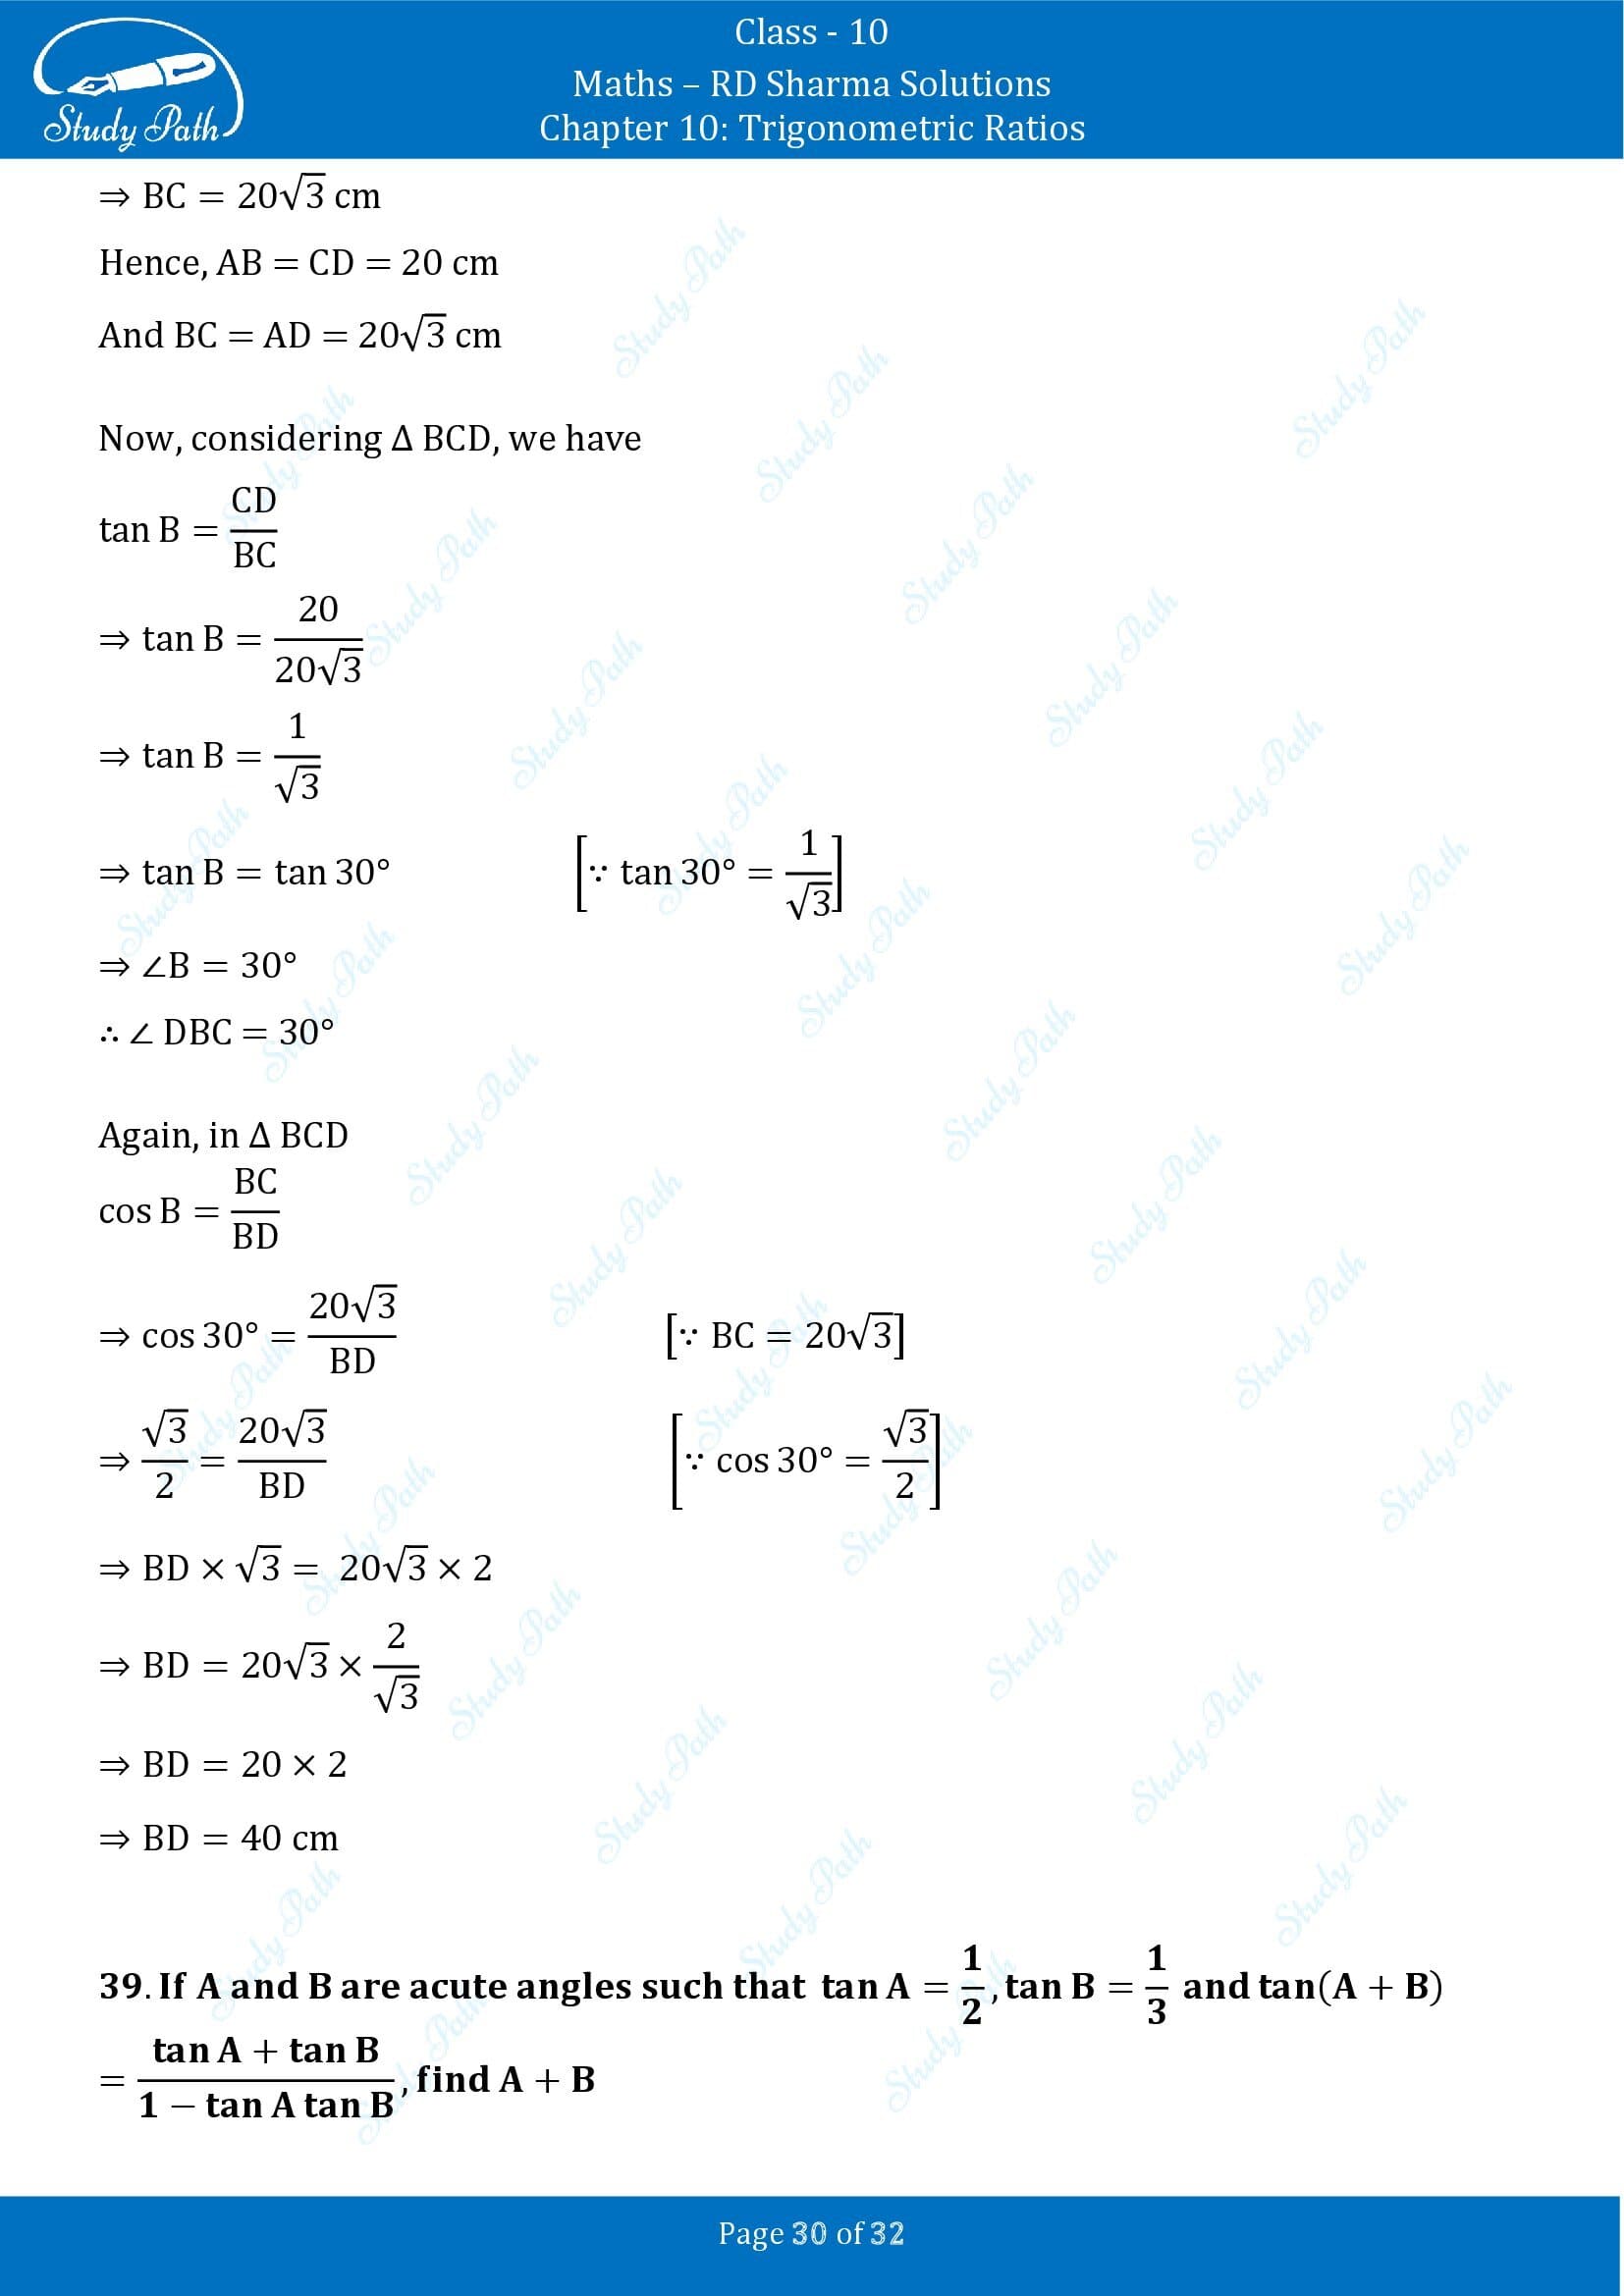 RD Sharma Solutions Class 10 Chapter 10 Trigonometric Ratios Exercise 10.2 00030